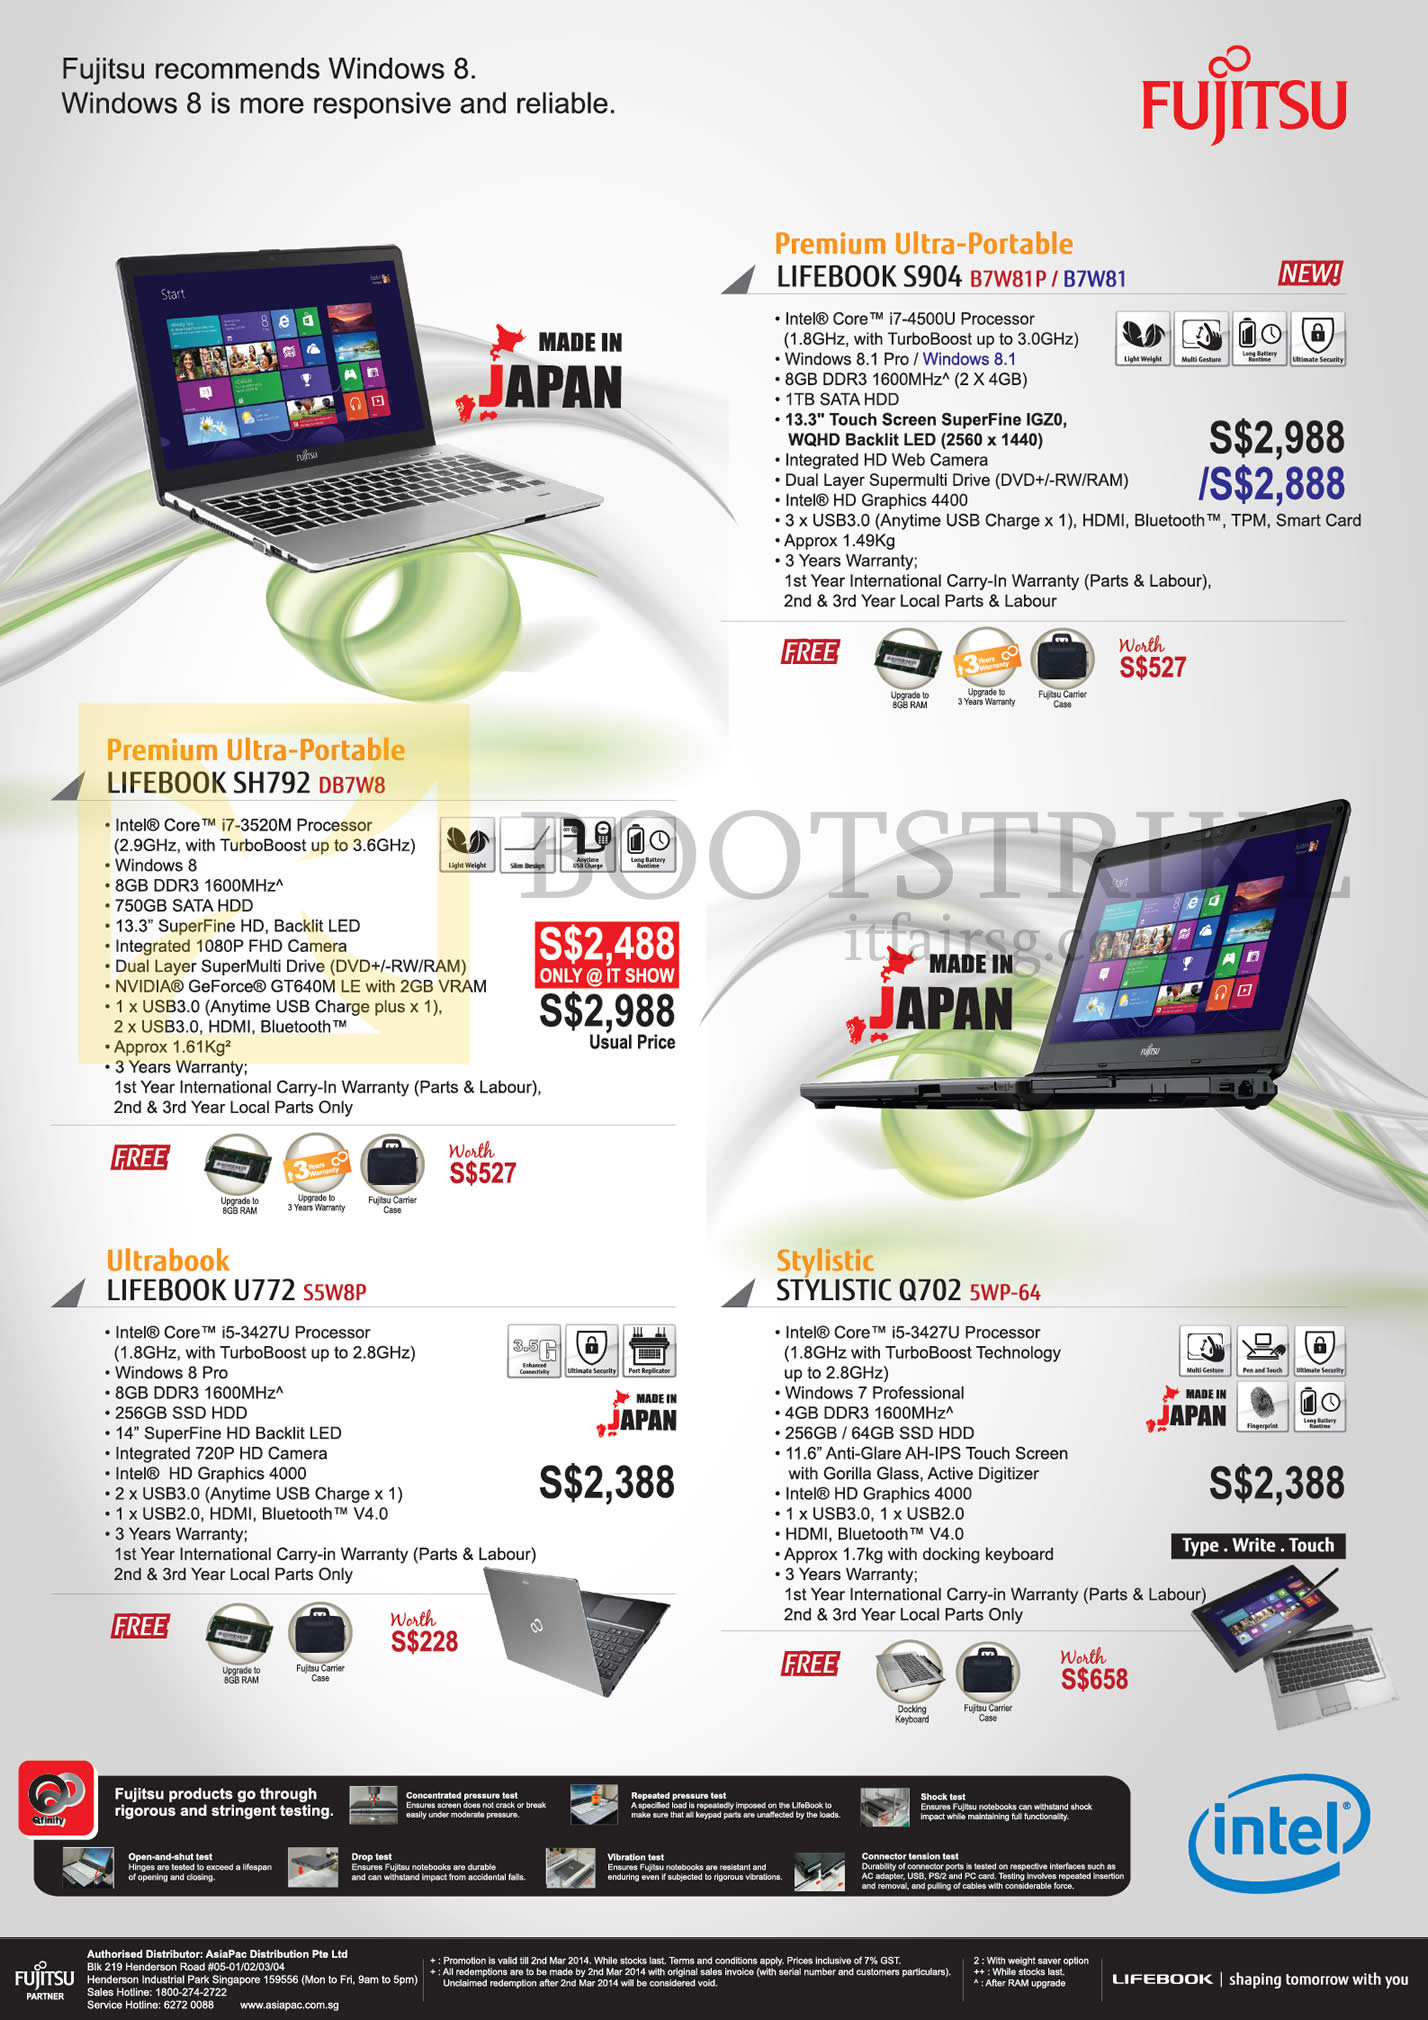 IT SHOW 2014 price list image brochure of Fujitsu Notebooks Lifebook S904 B7W81P B7W81, SH792 DB7W8, U772 S5W8P, Stylistic Q702 5WP-64